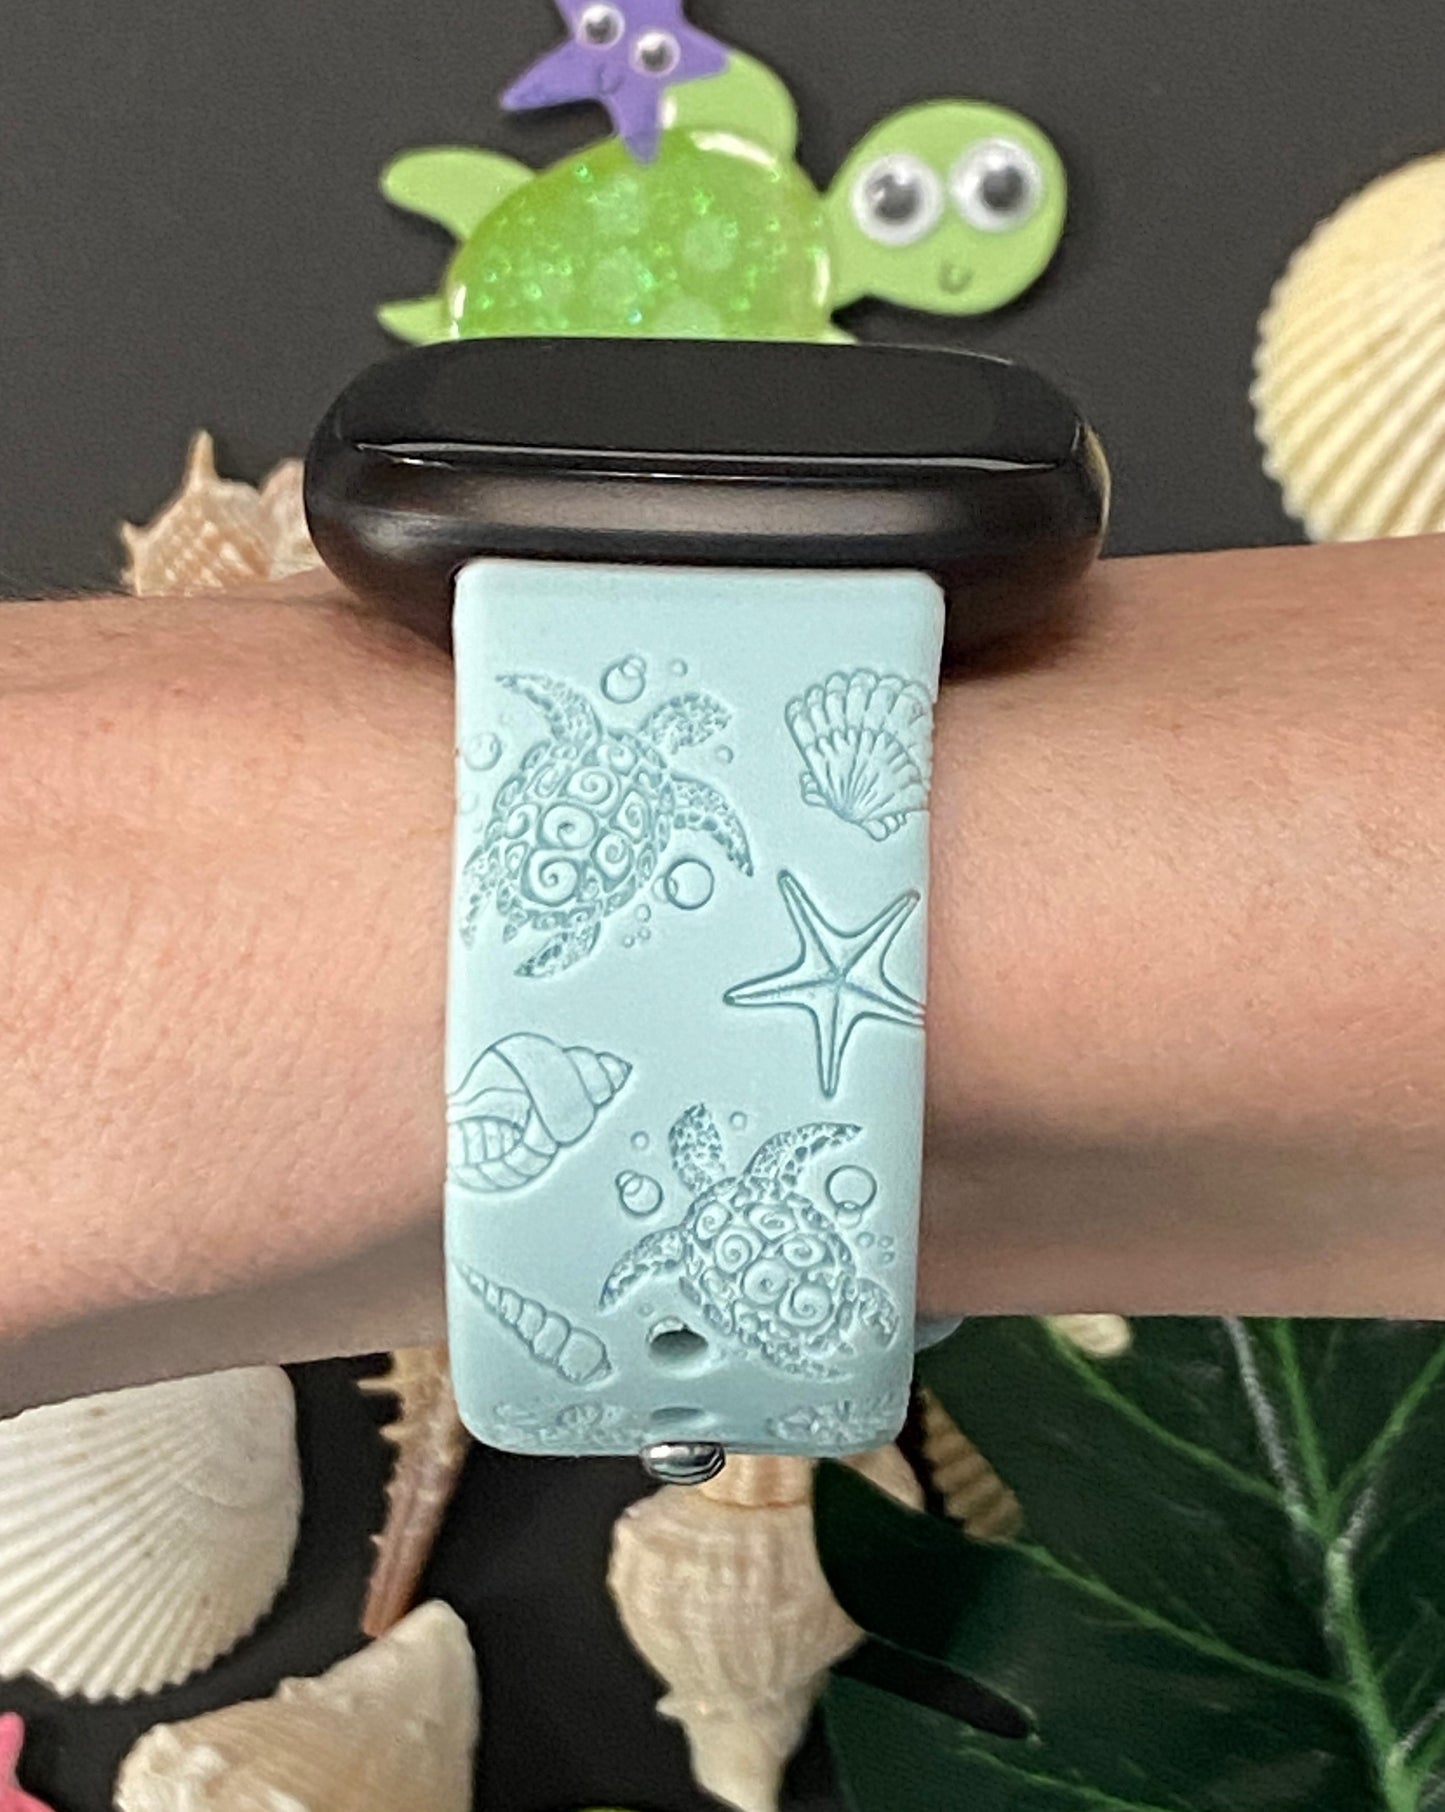 Turtles and Shells Fitbit Versa 3/Versa 4/Sense/Sense 2 Watch Band